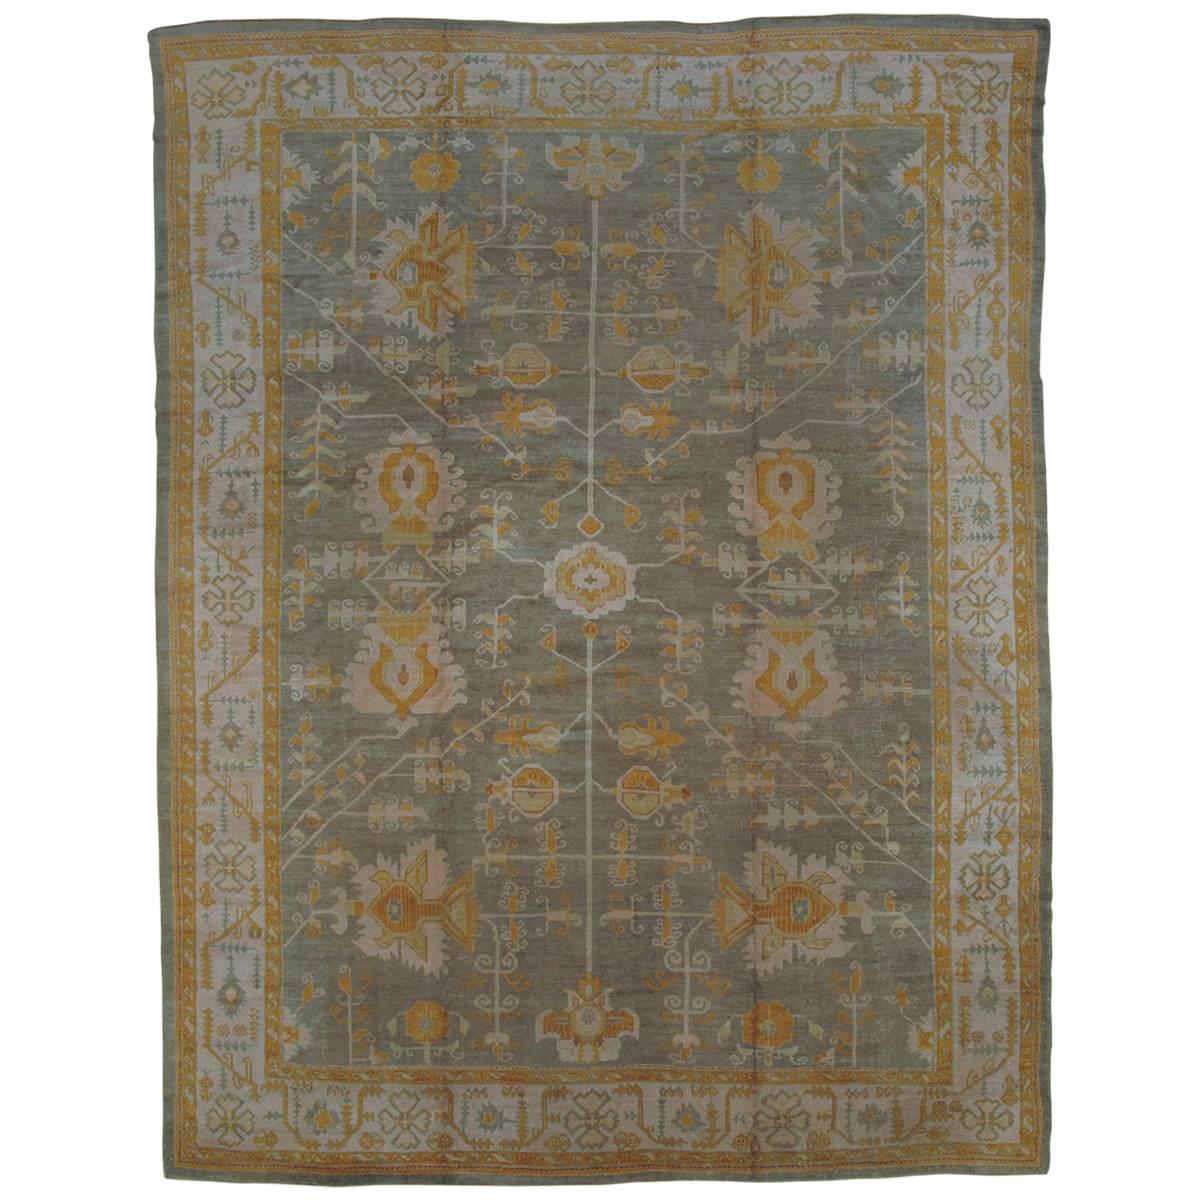 Antique Oushak Carpet, Oriental Rug, Handmade Grey, Ivory, Saffron For Sale